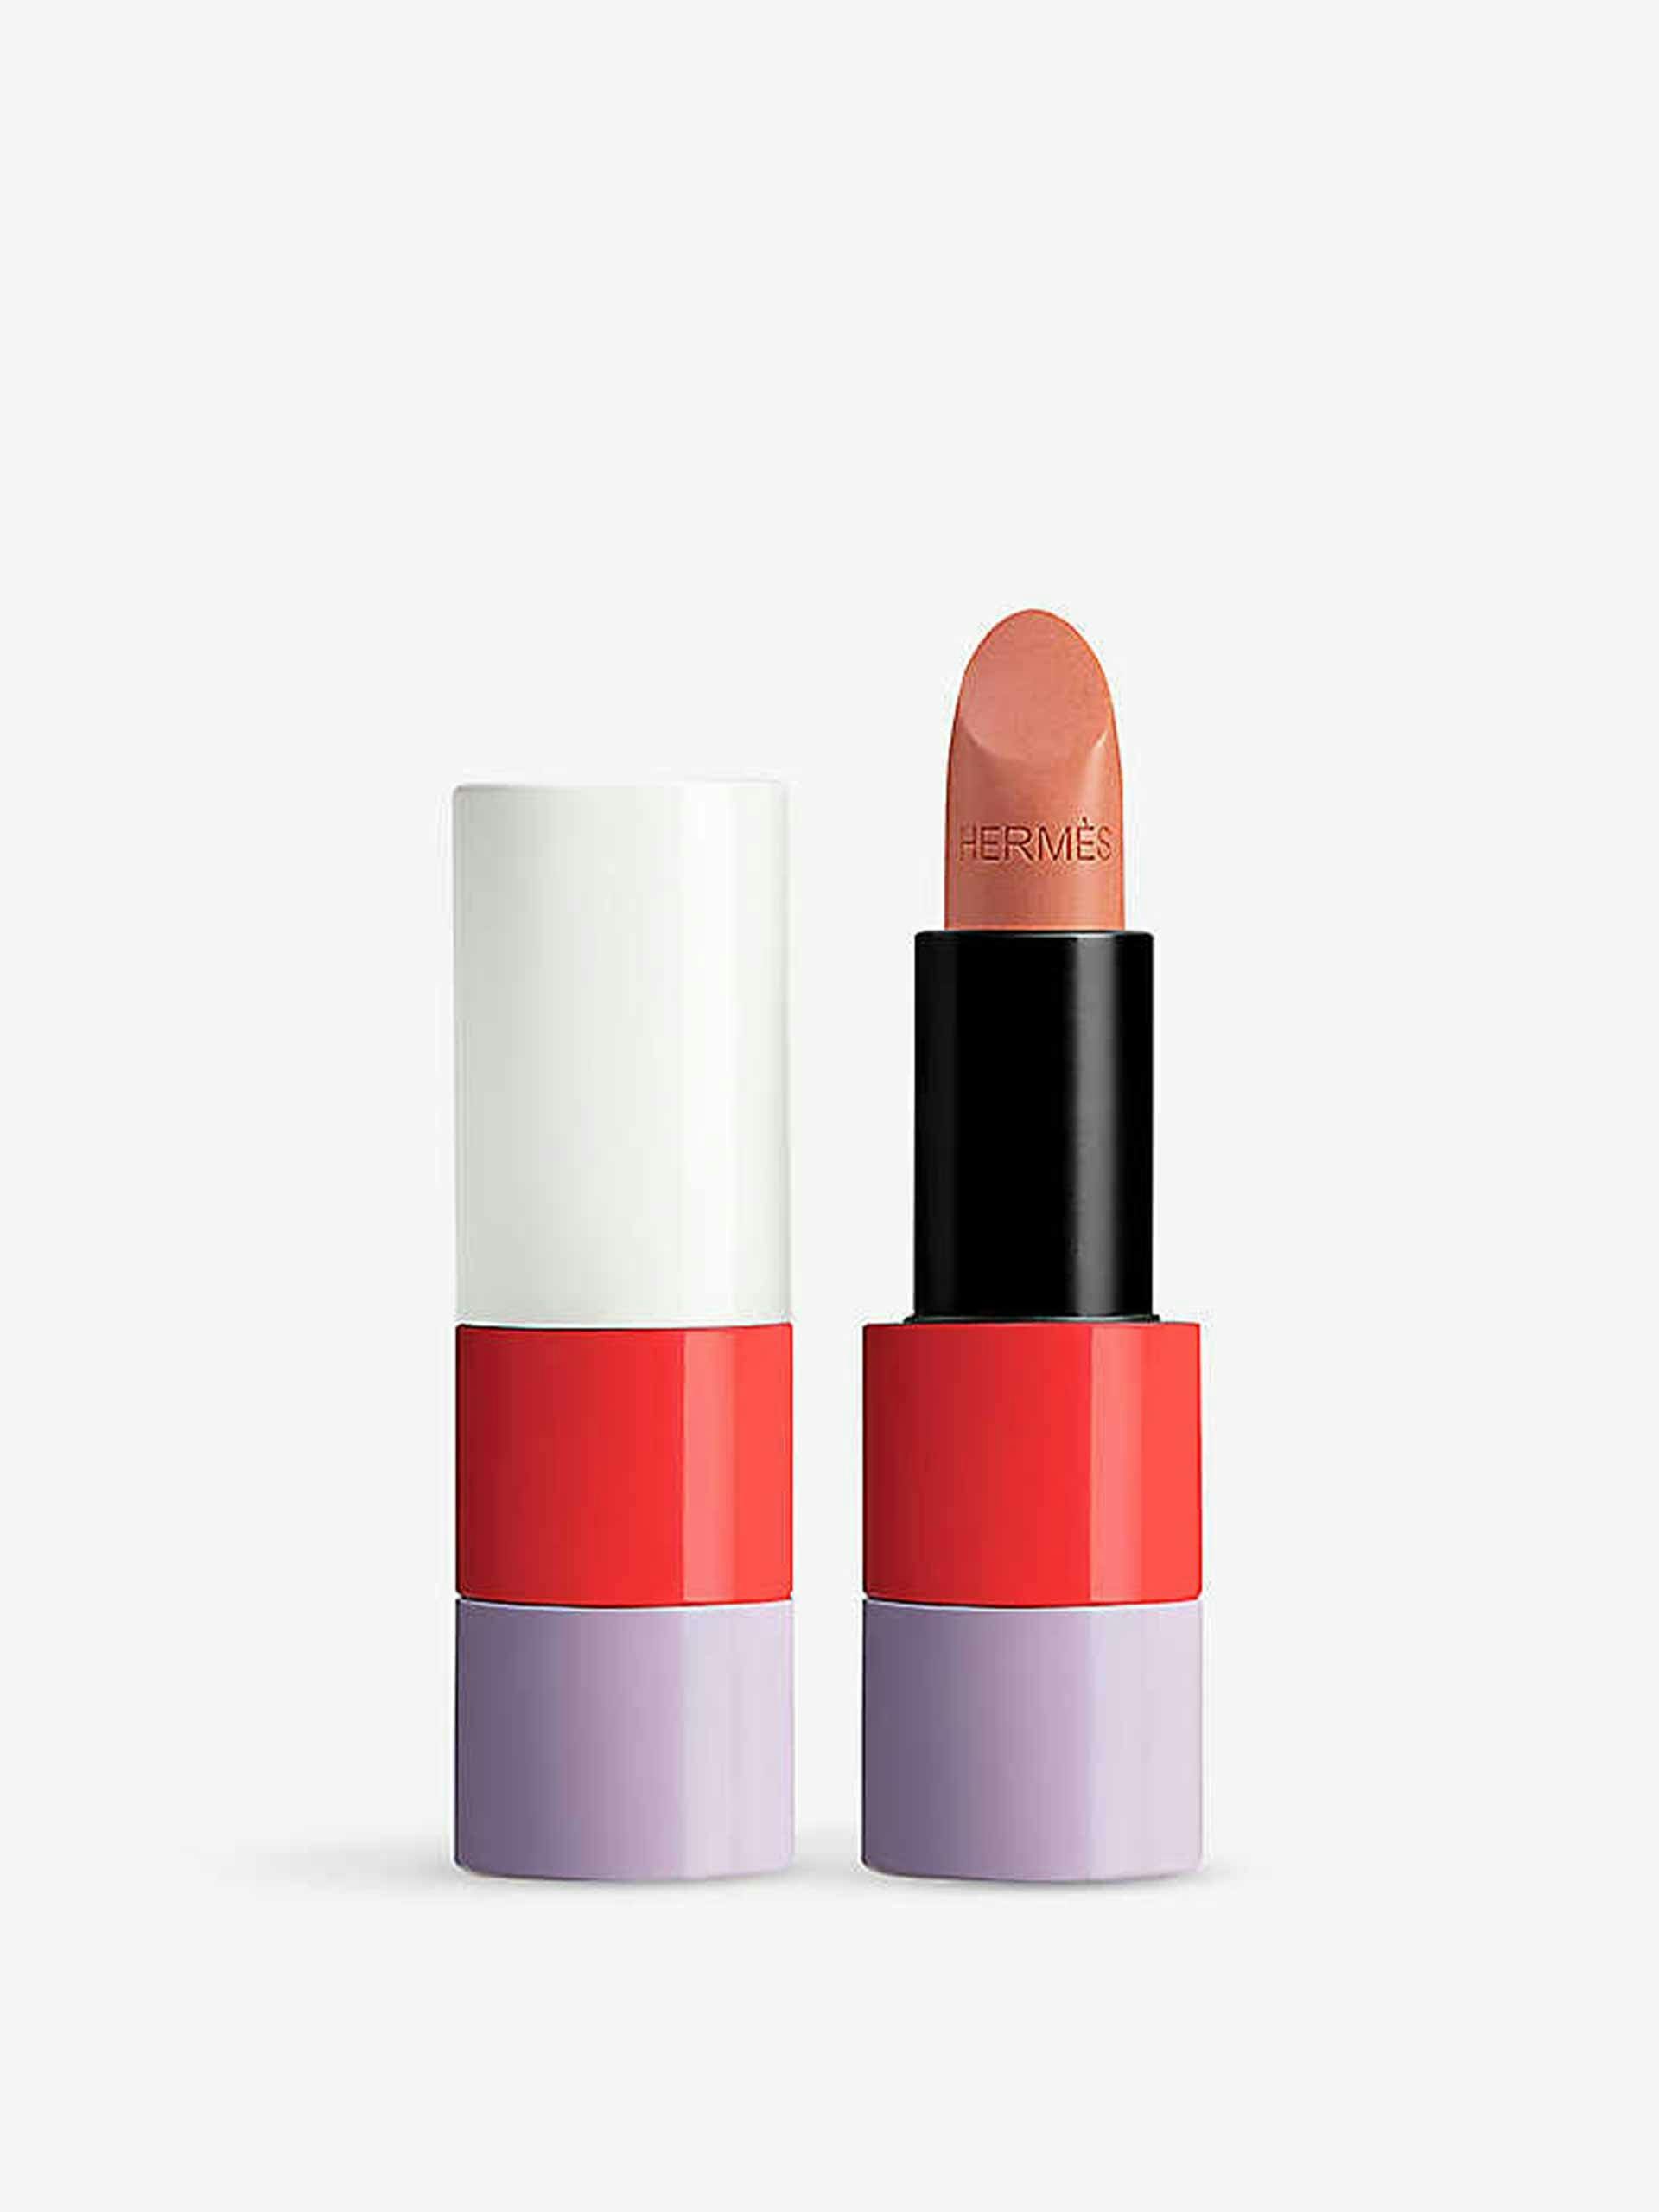 Rouge Hermès limited-edition lipstick